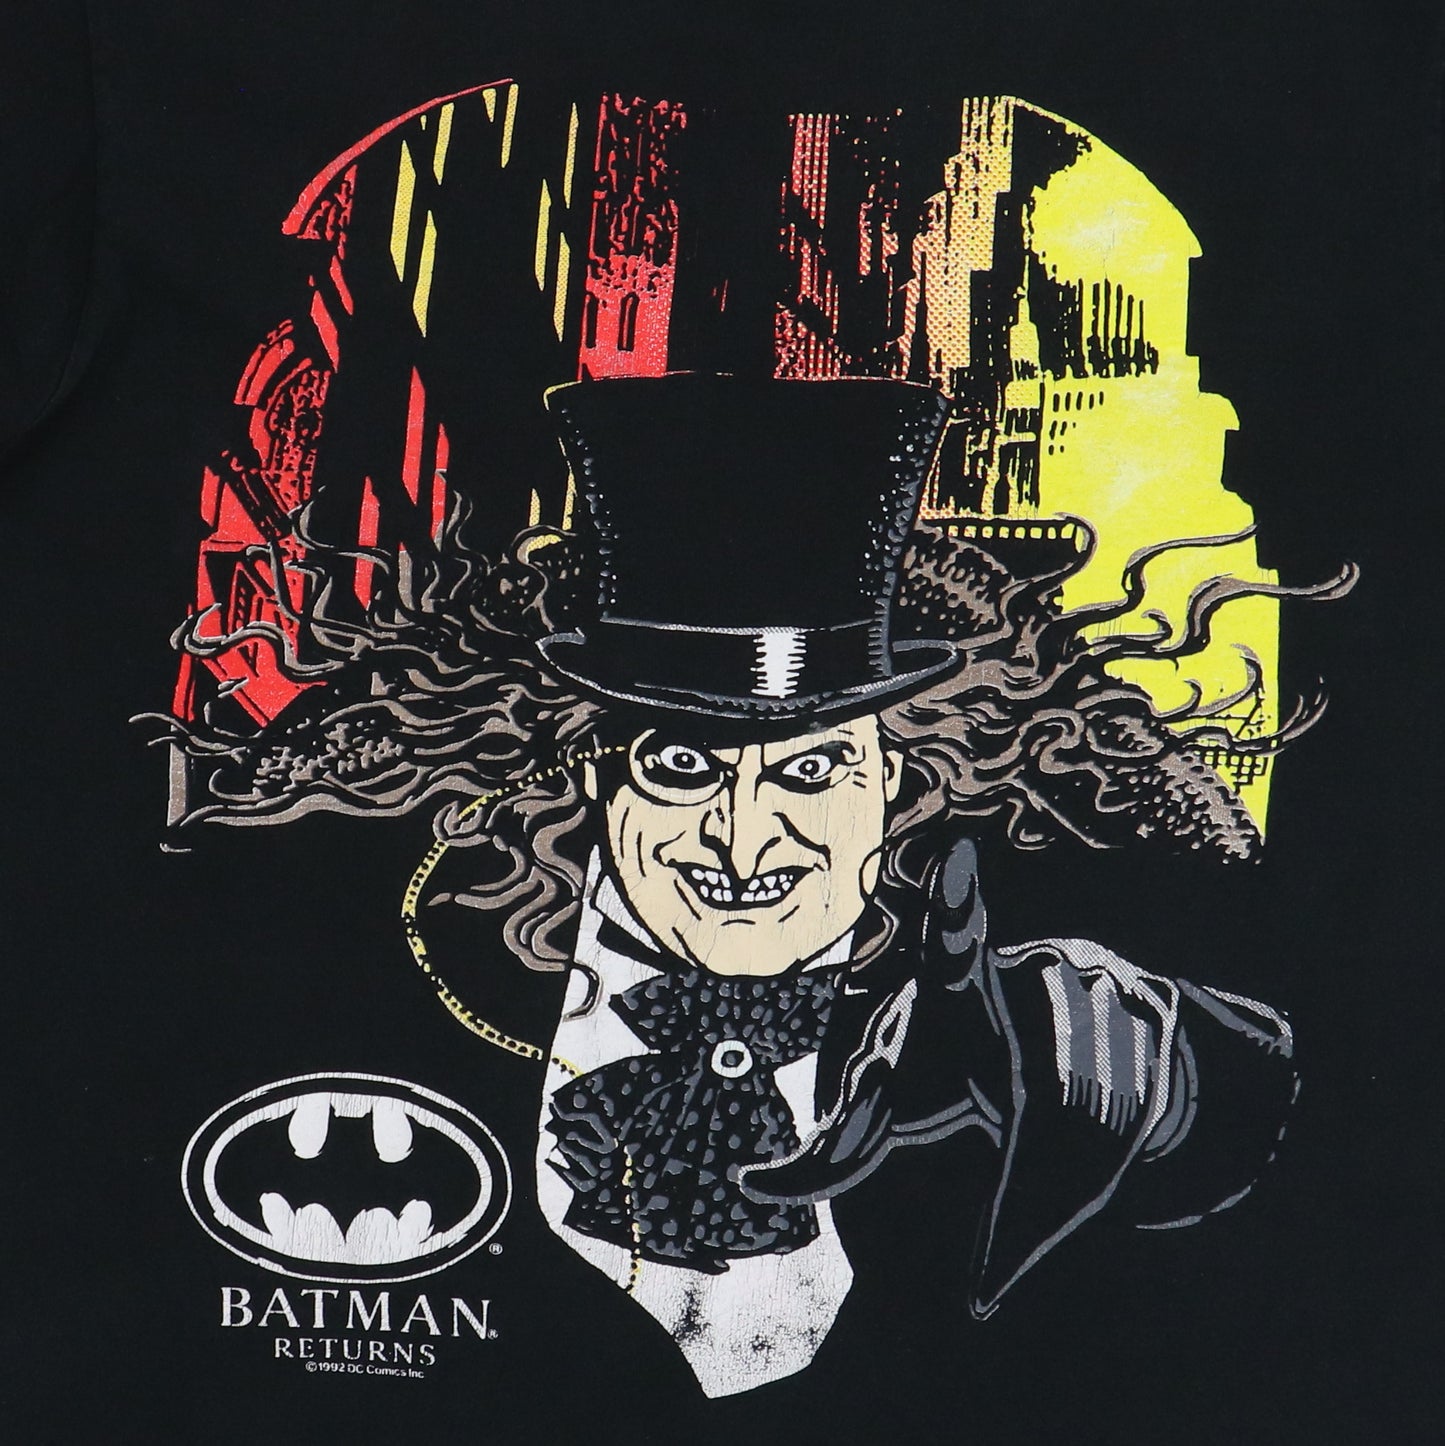 1992 Batman The Penguin Shirt